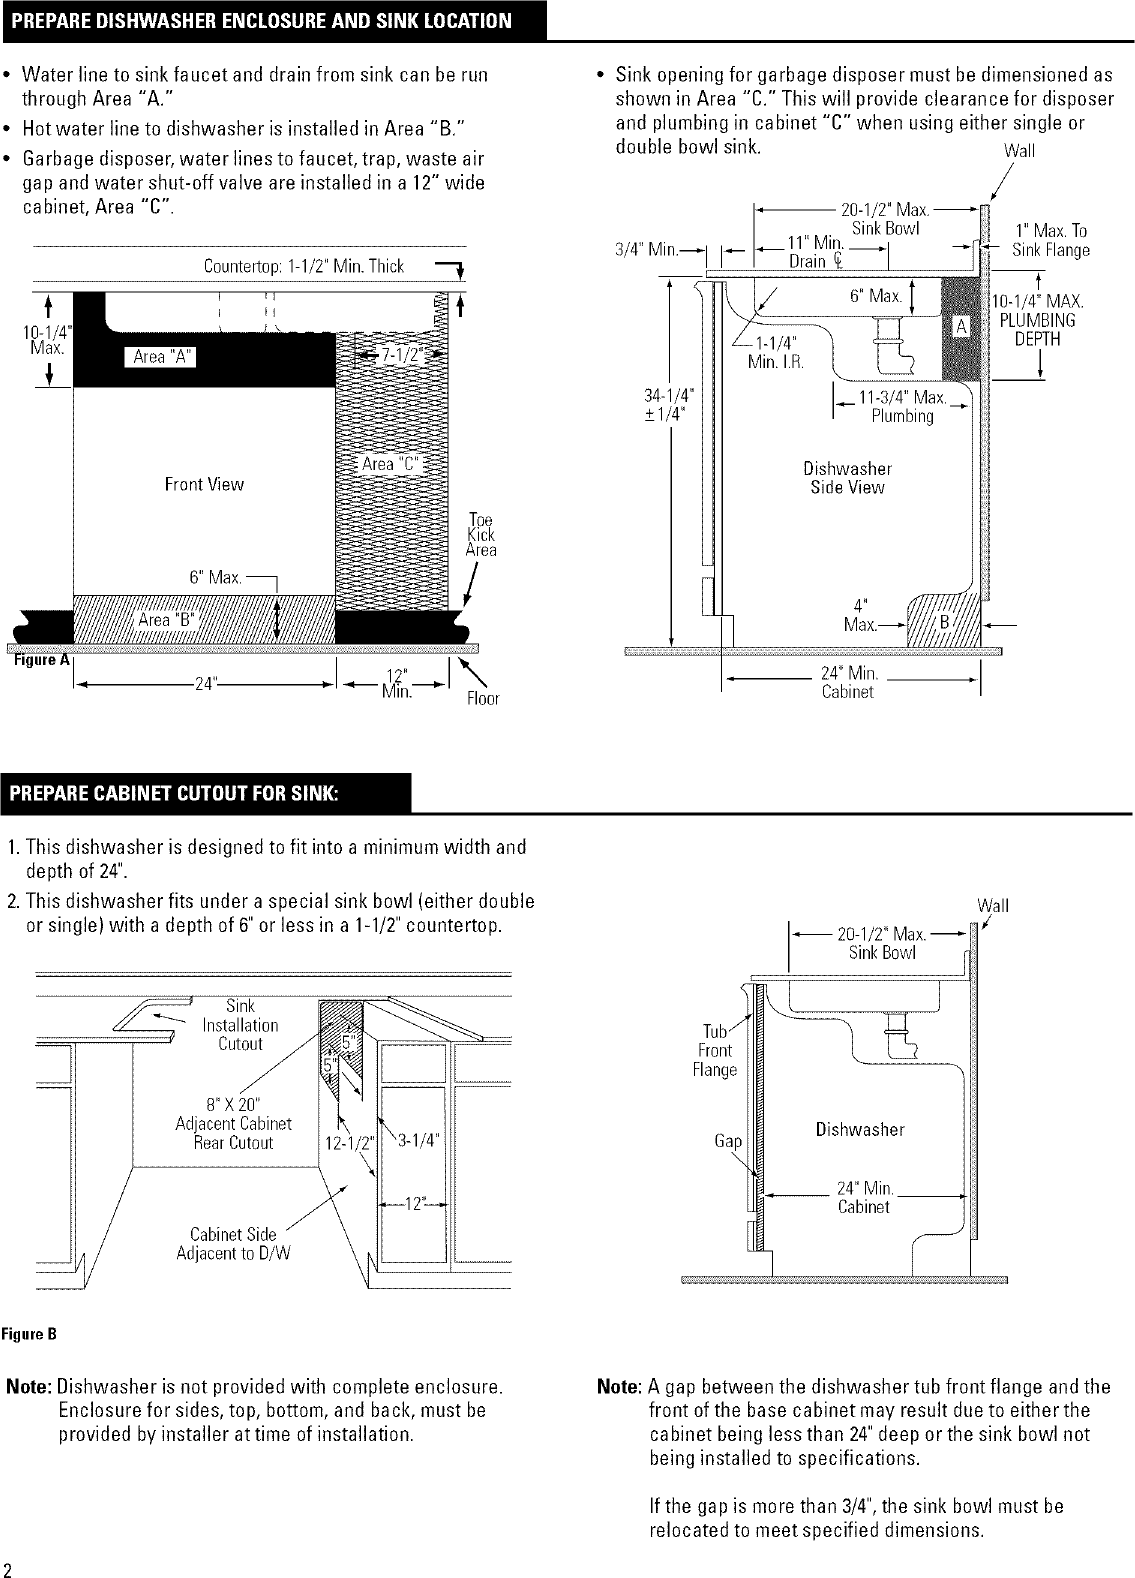 Page 2 of 8 - GE  Dishwasher Manual L0504084